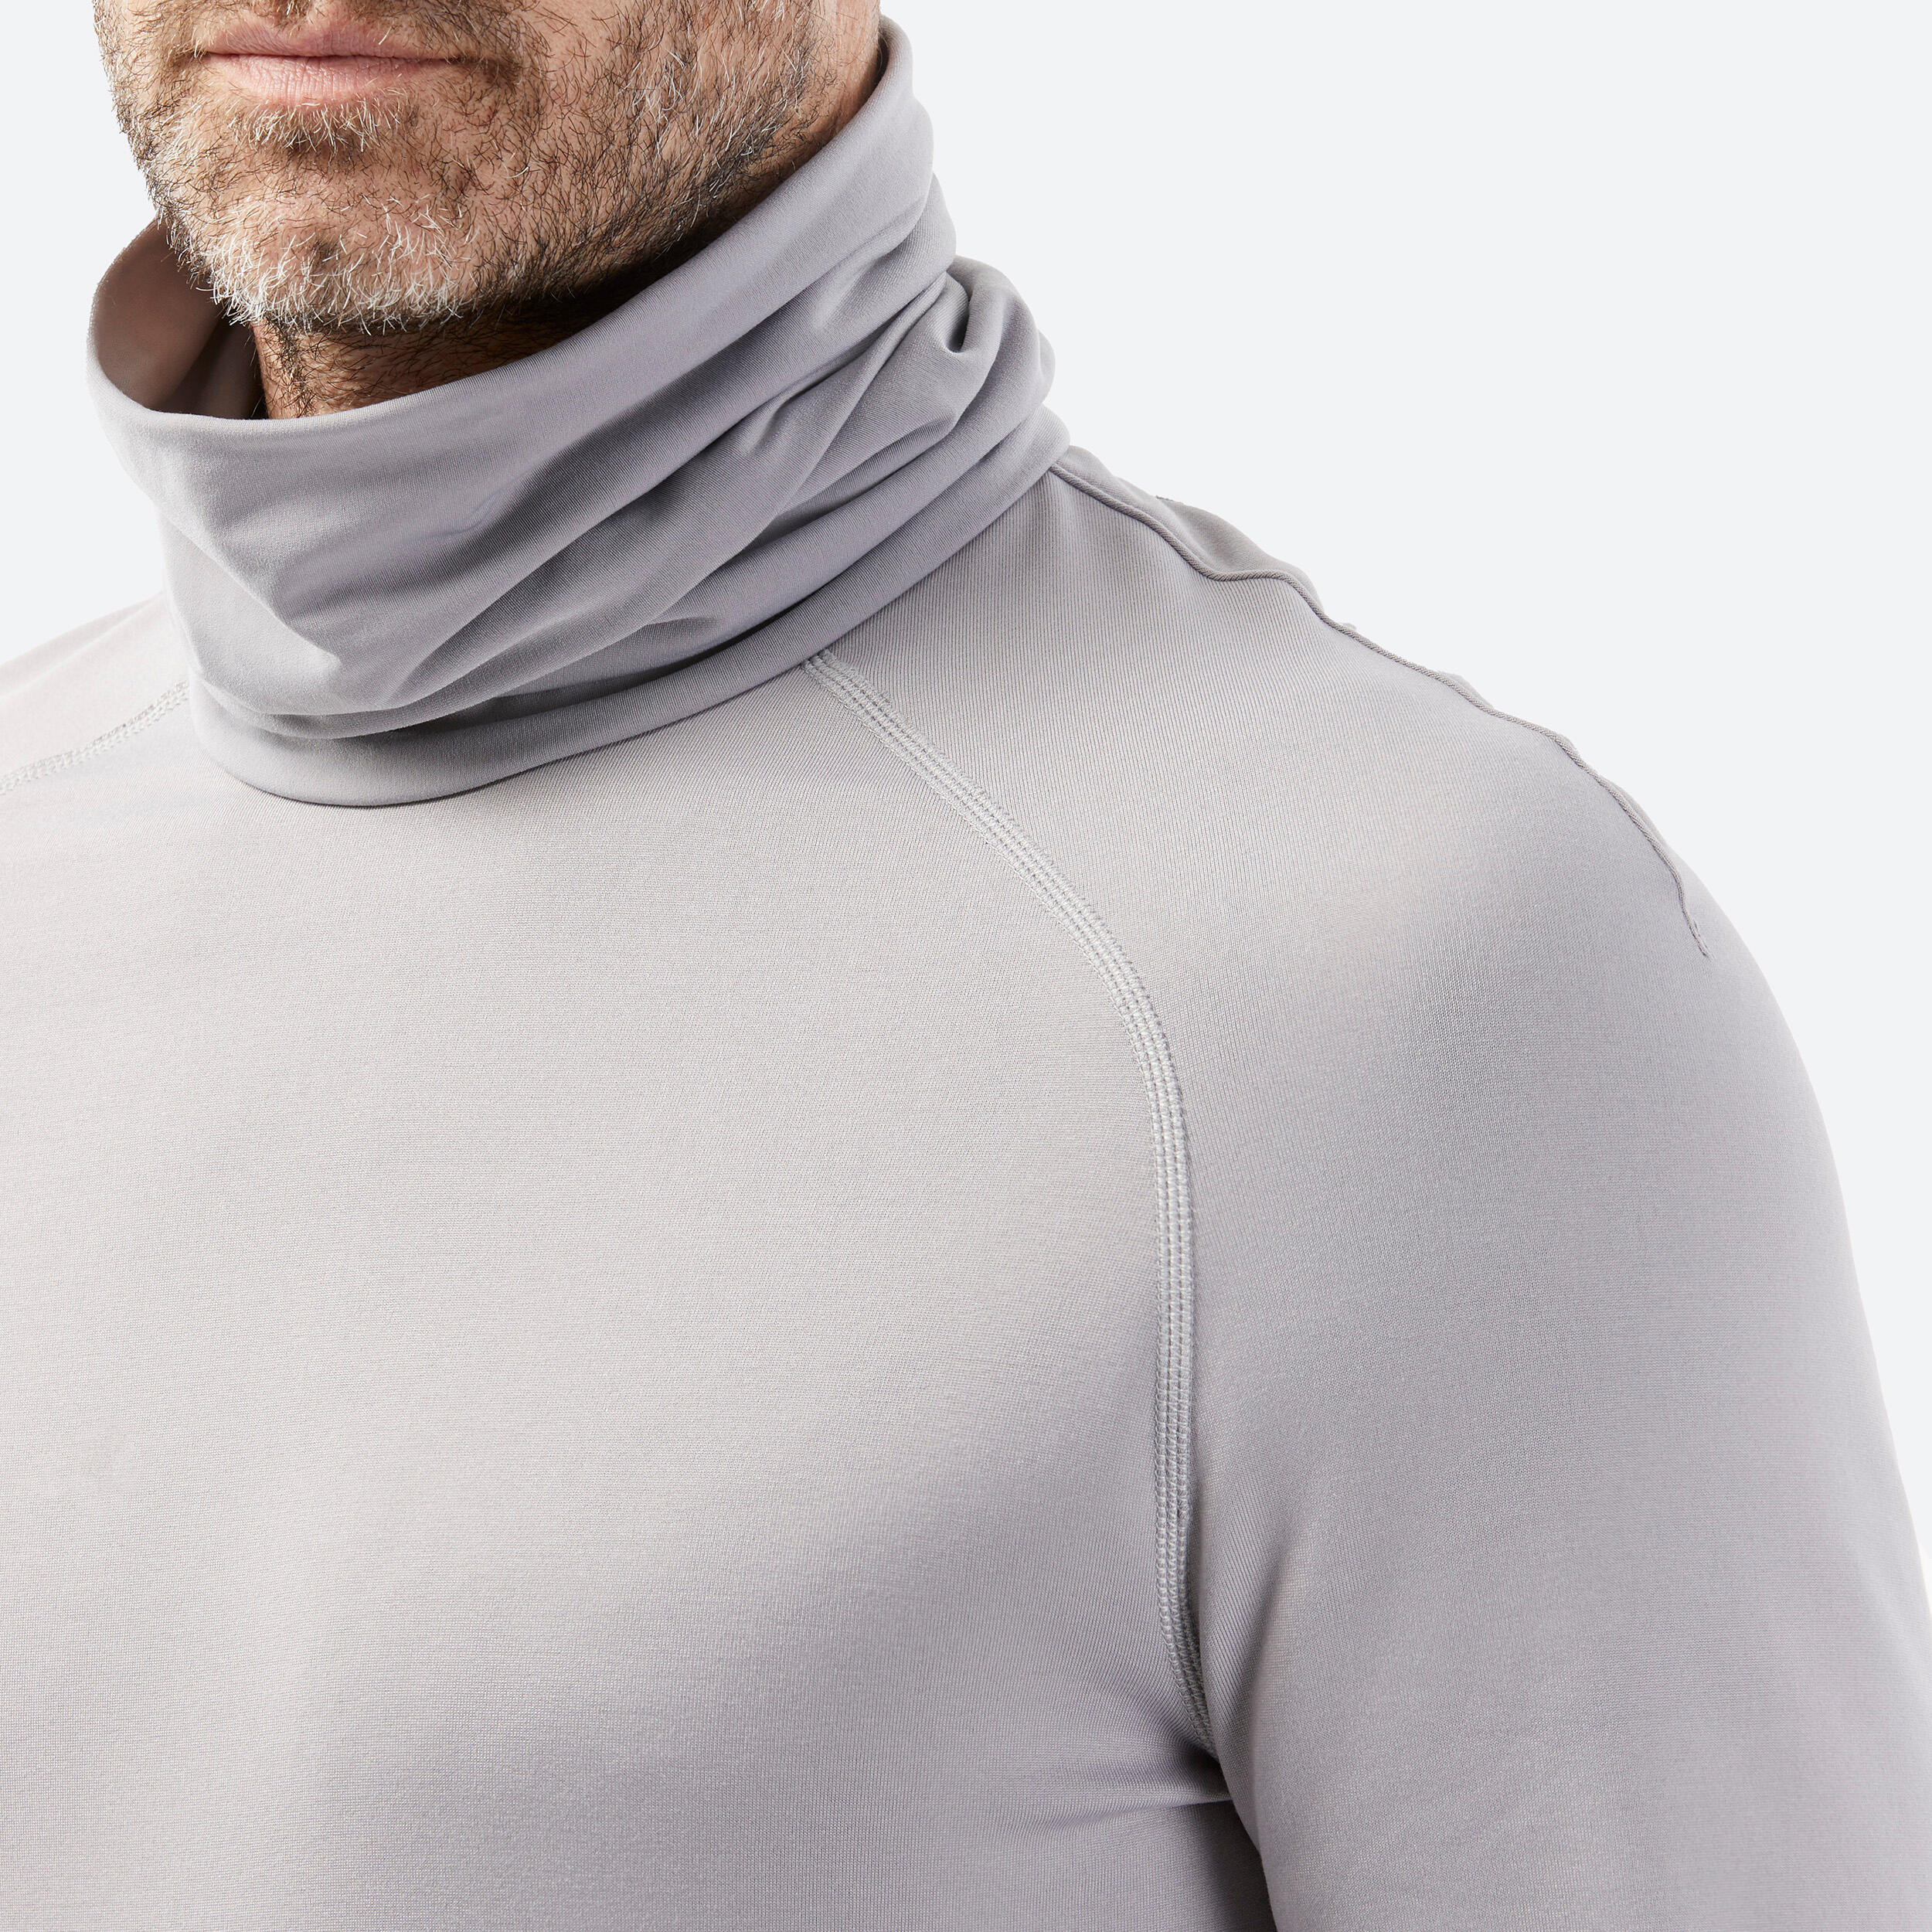 Men's BL 520 thermal base layer roll neck ski top - light grey 5/5